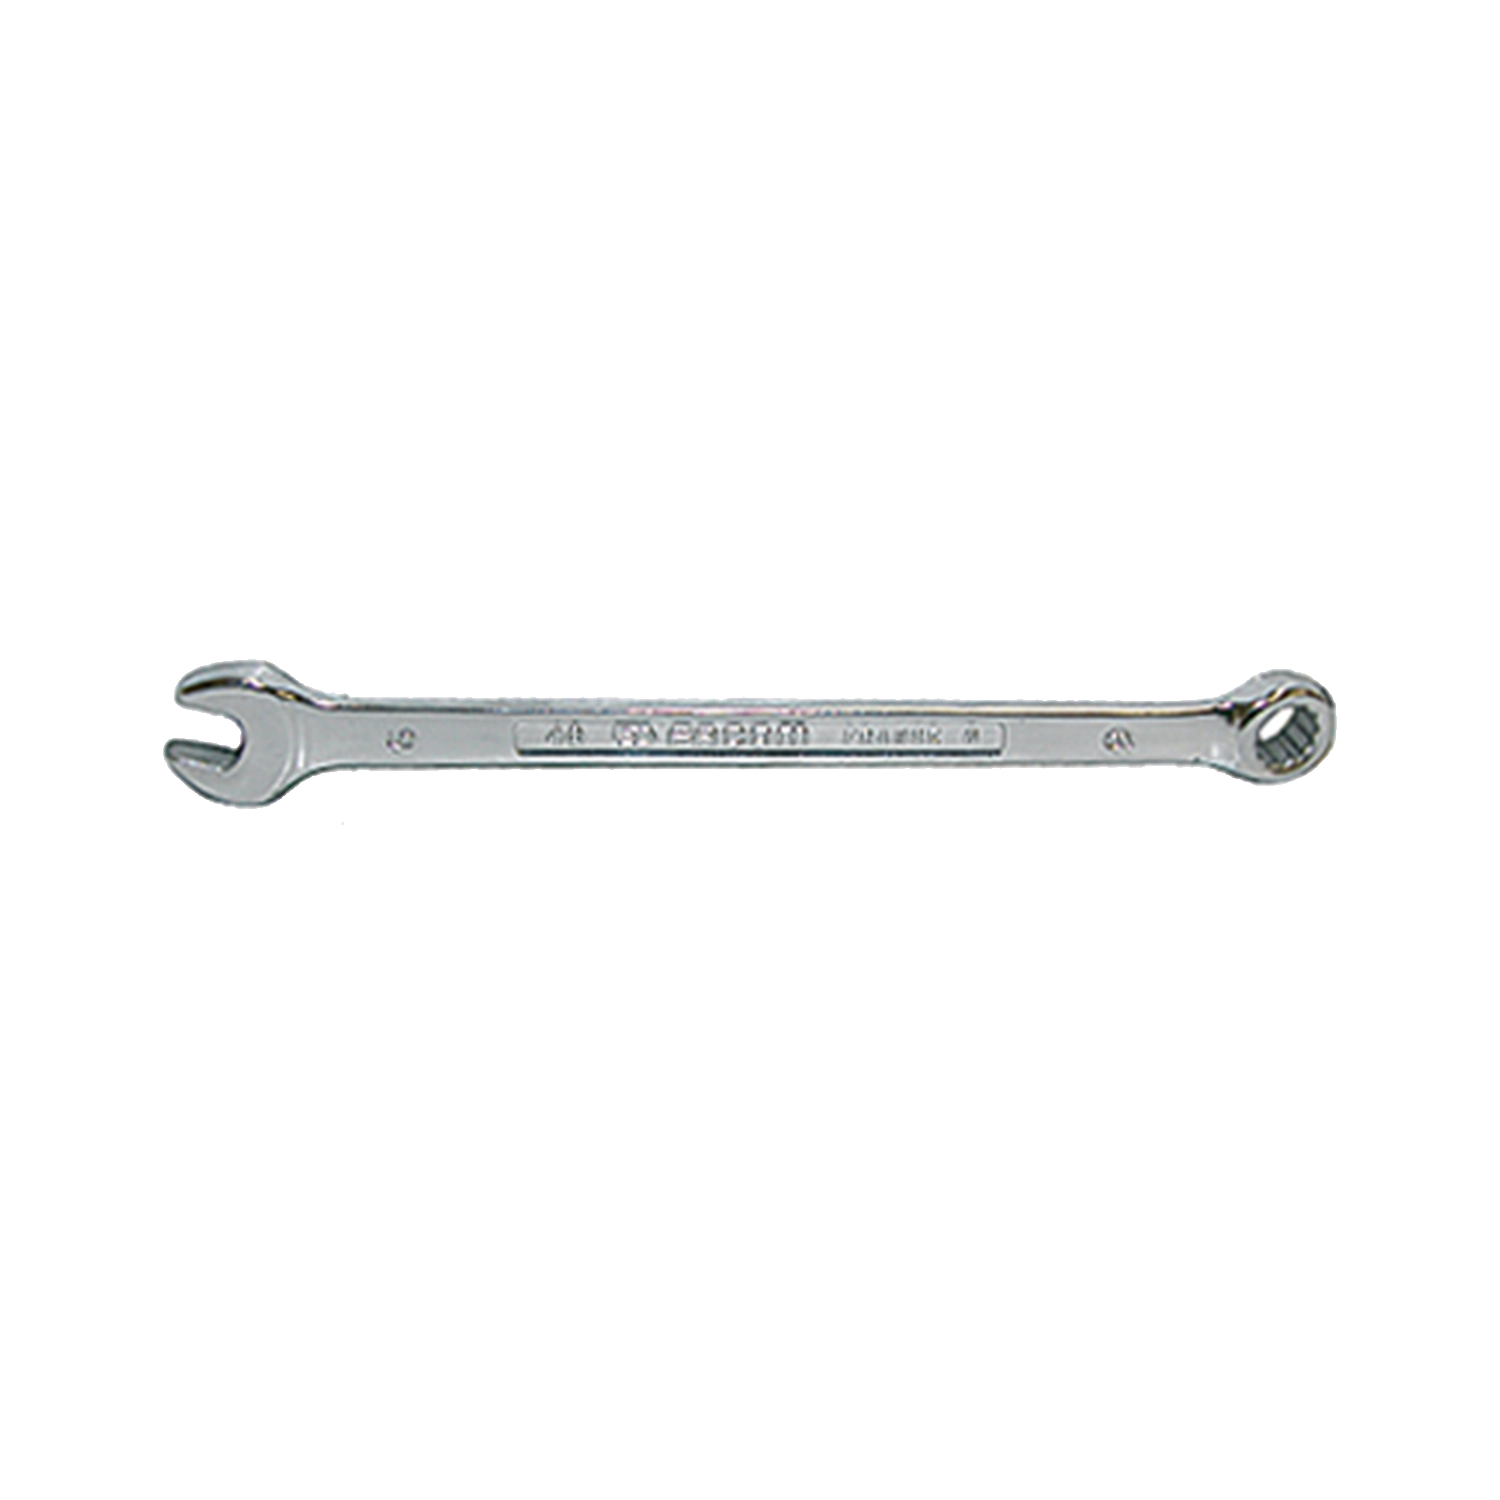 STROXX Ringsteeksleutel Type 440.30: Ringsteeksleutel met typeaanduiding 440.30.